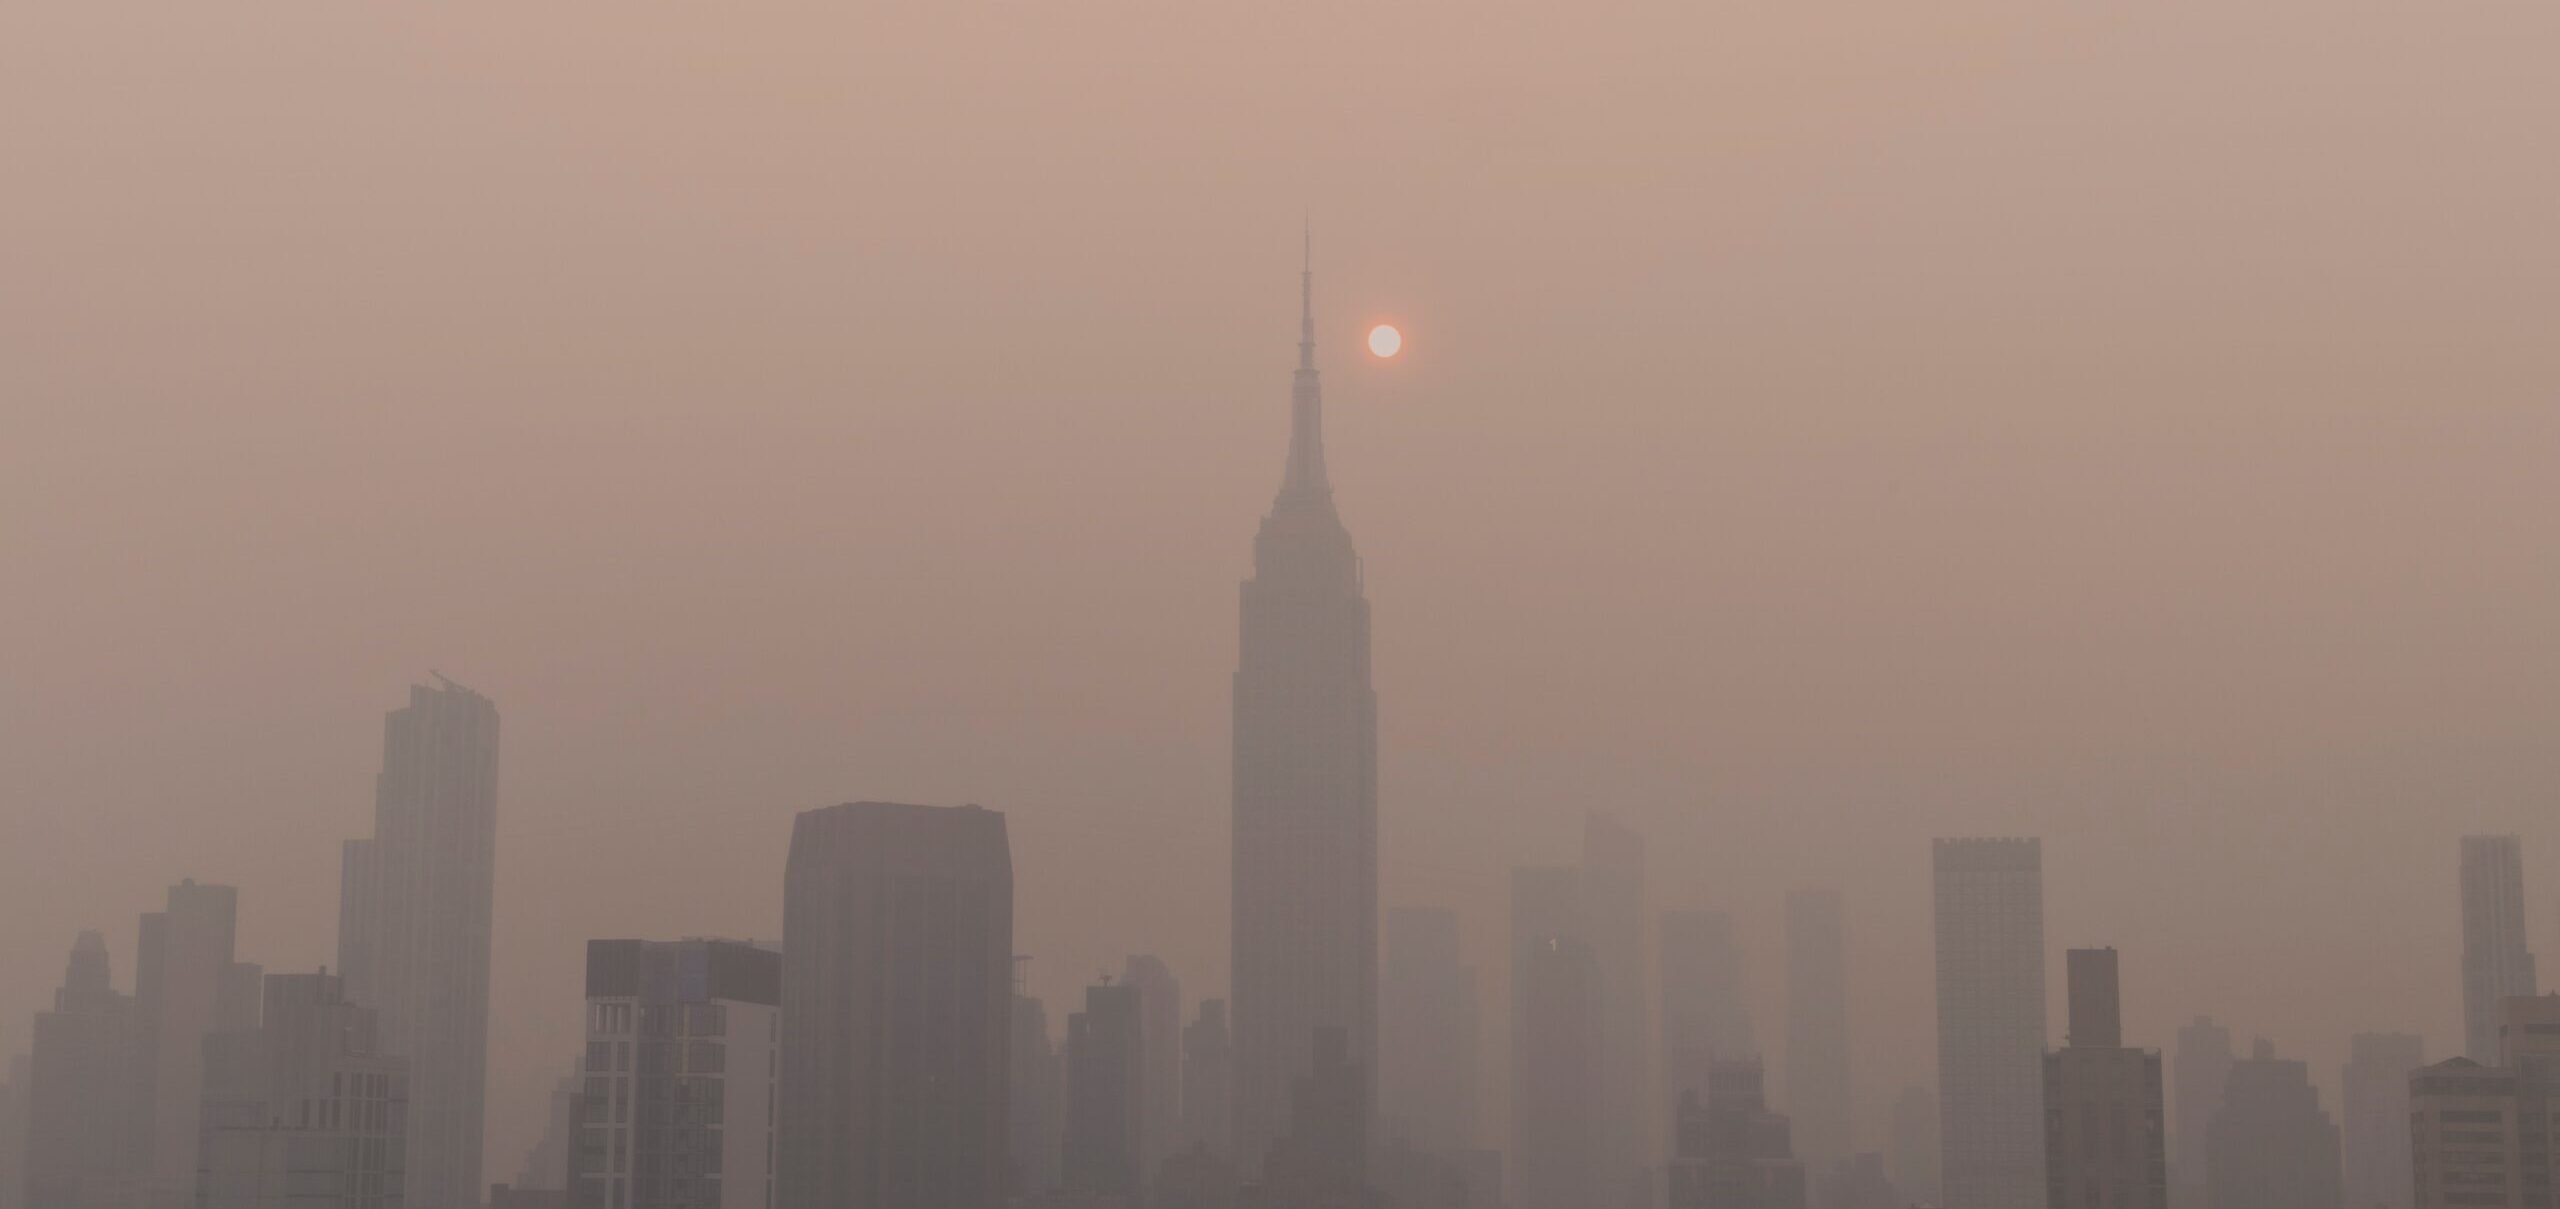 smoke filled sky of New York city